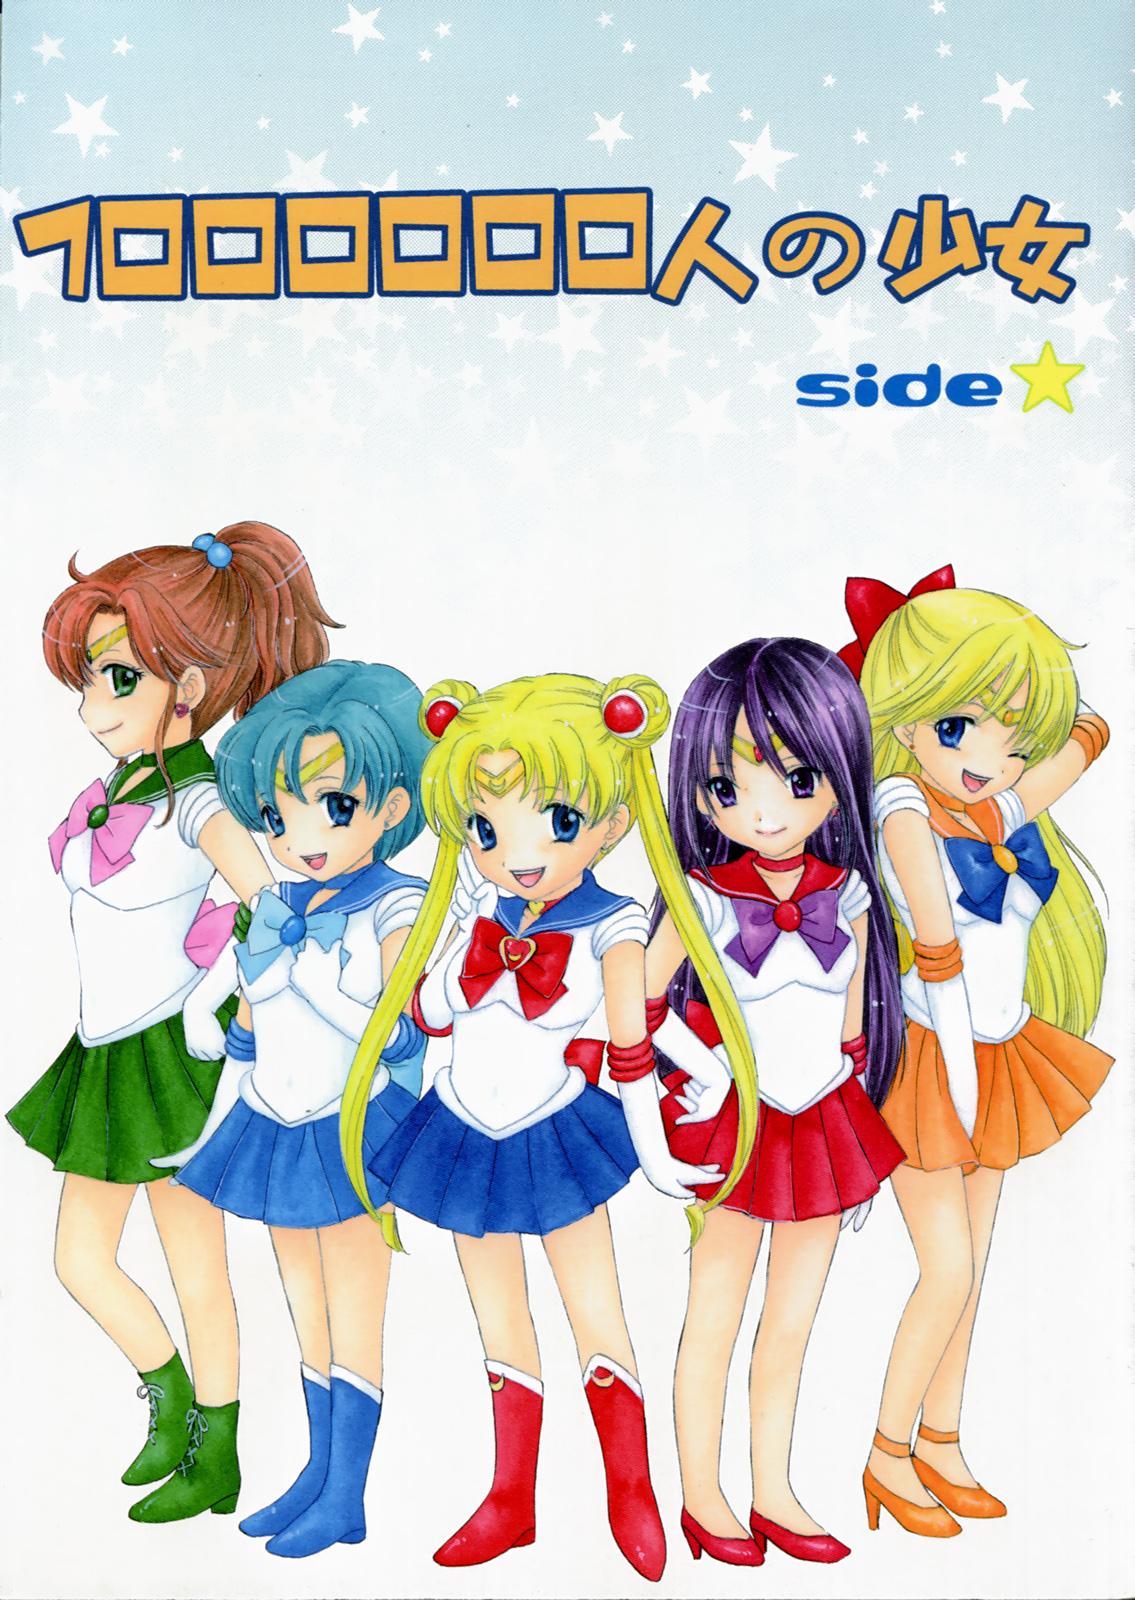 Amateur 1000000-nin no Shoujo side star - Sailor moon Boob - Page 1